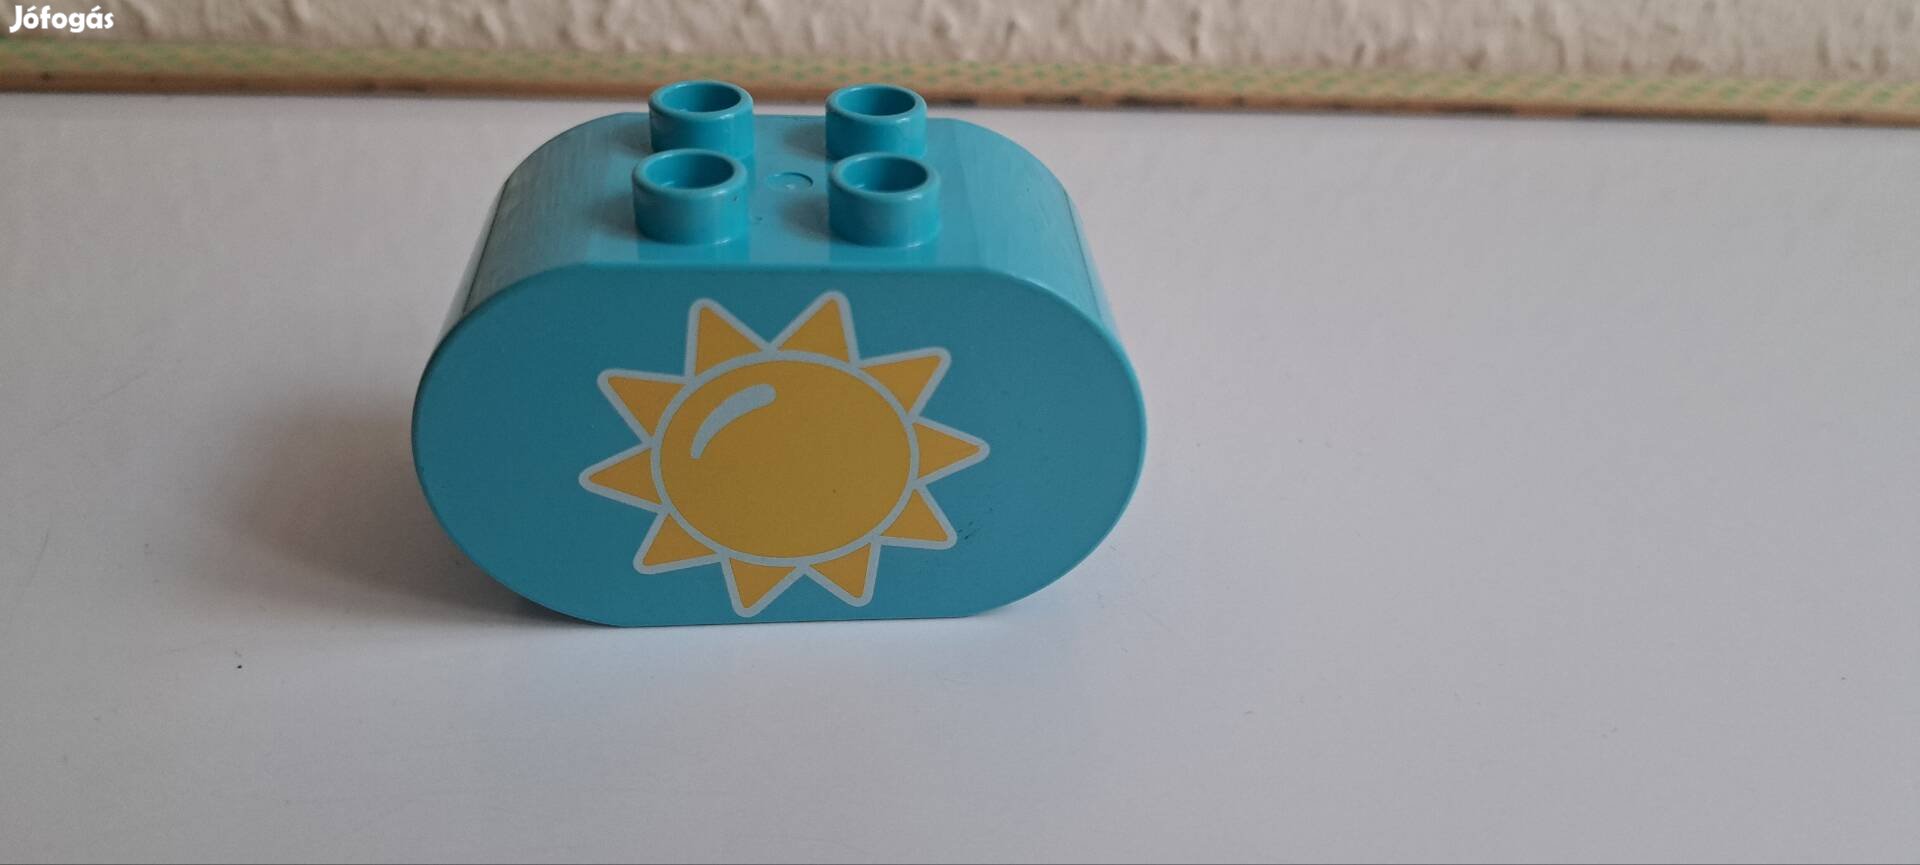 Lego duplo hold,nap képes elem 